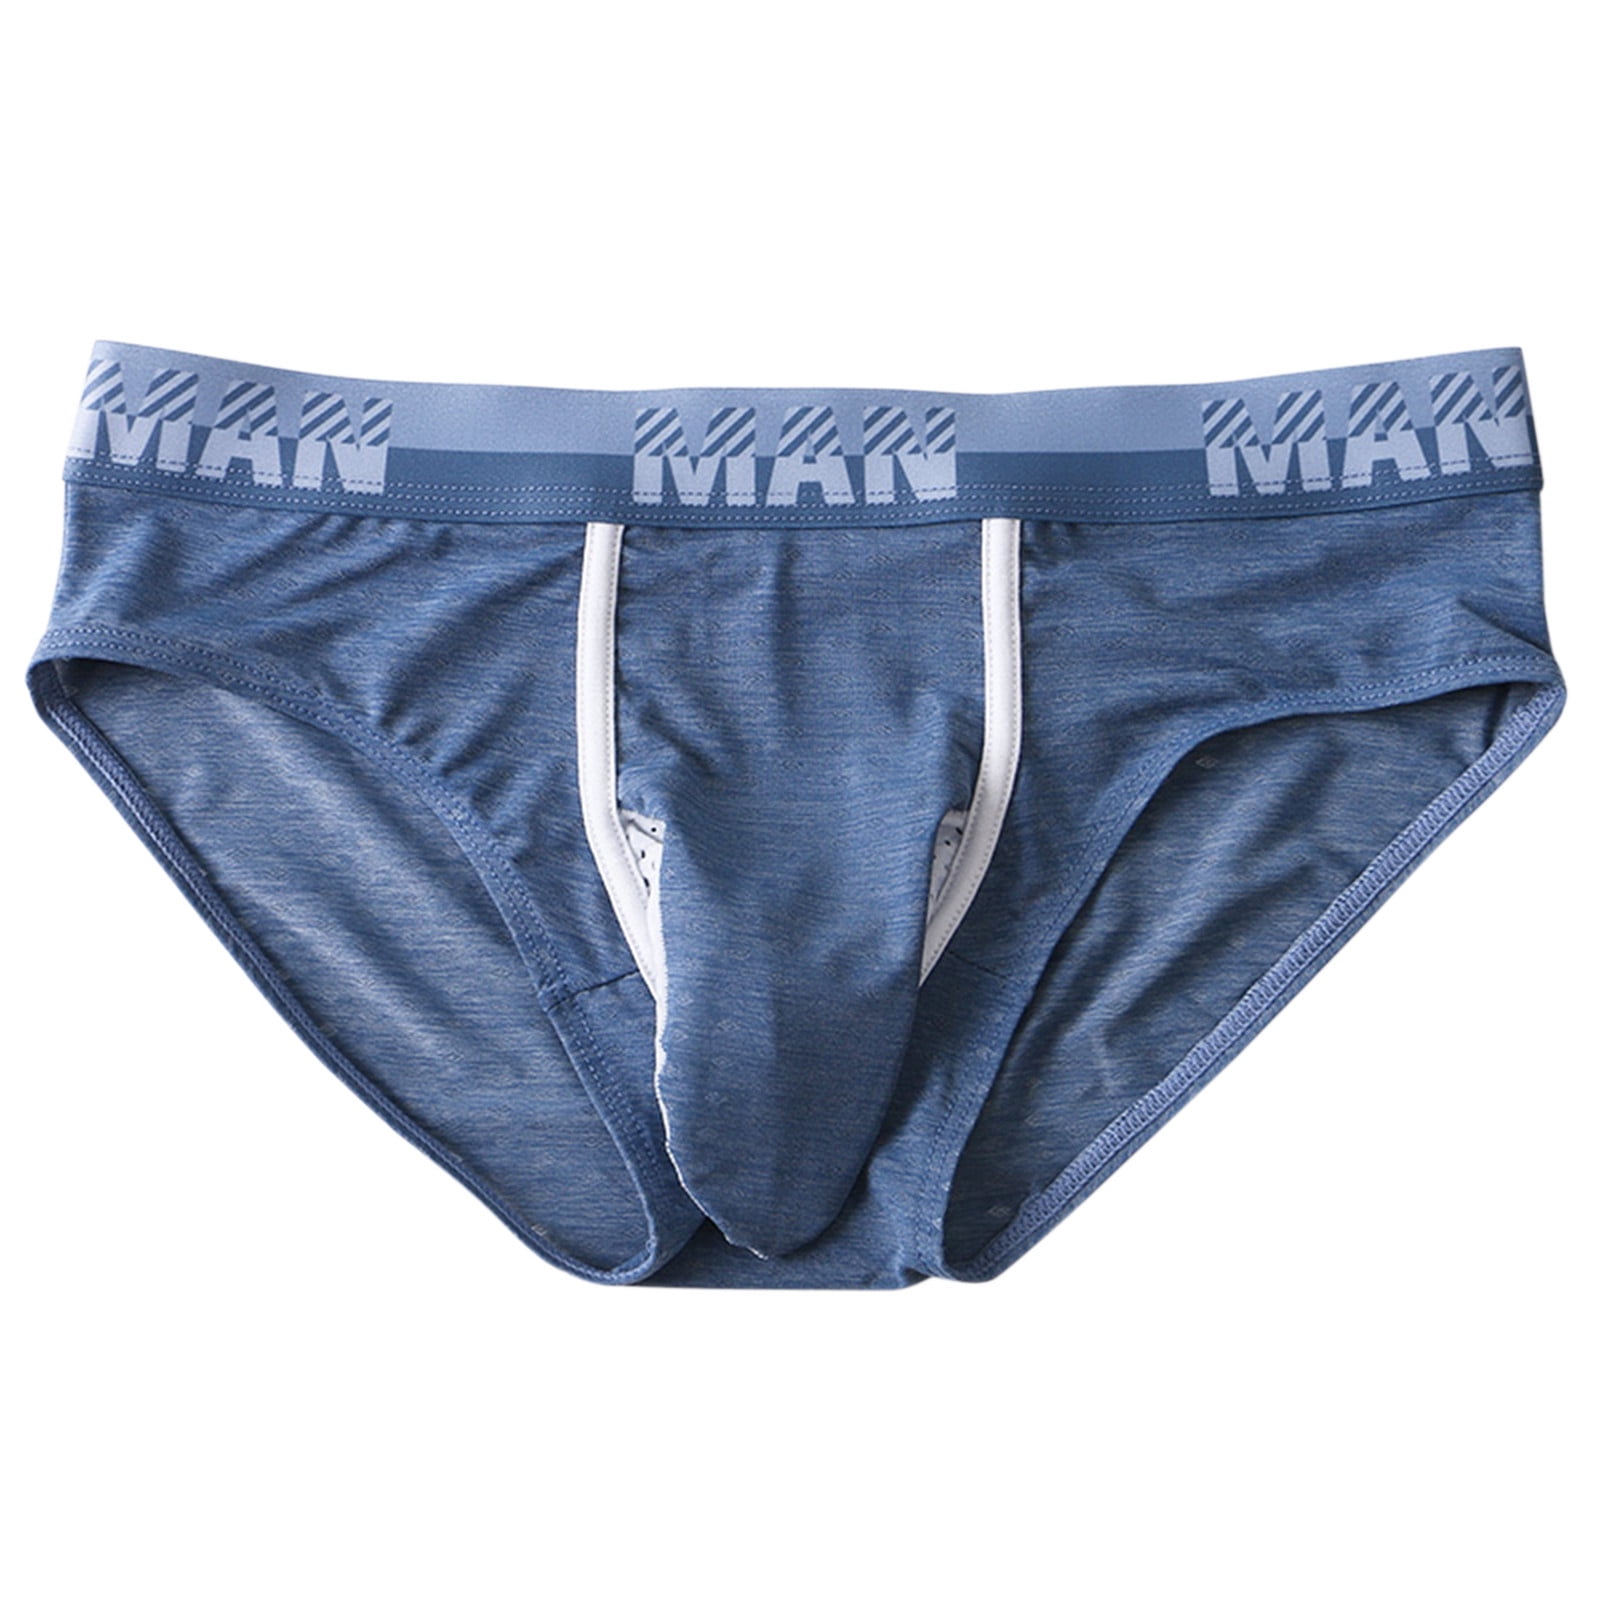 Men's Used Underwear for Sale in Fullerton, CA - OfferUp